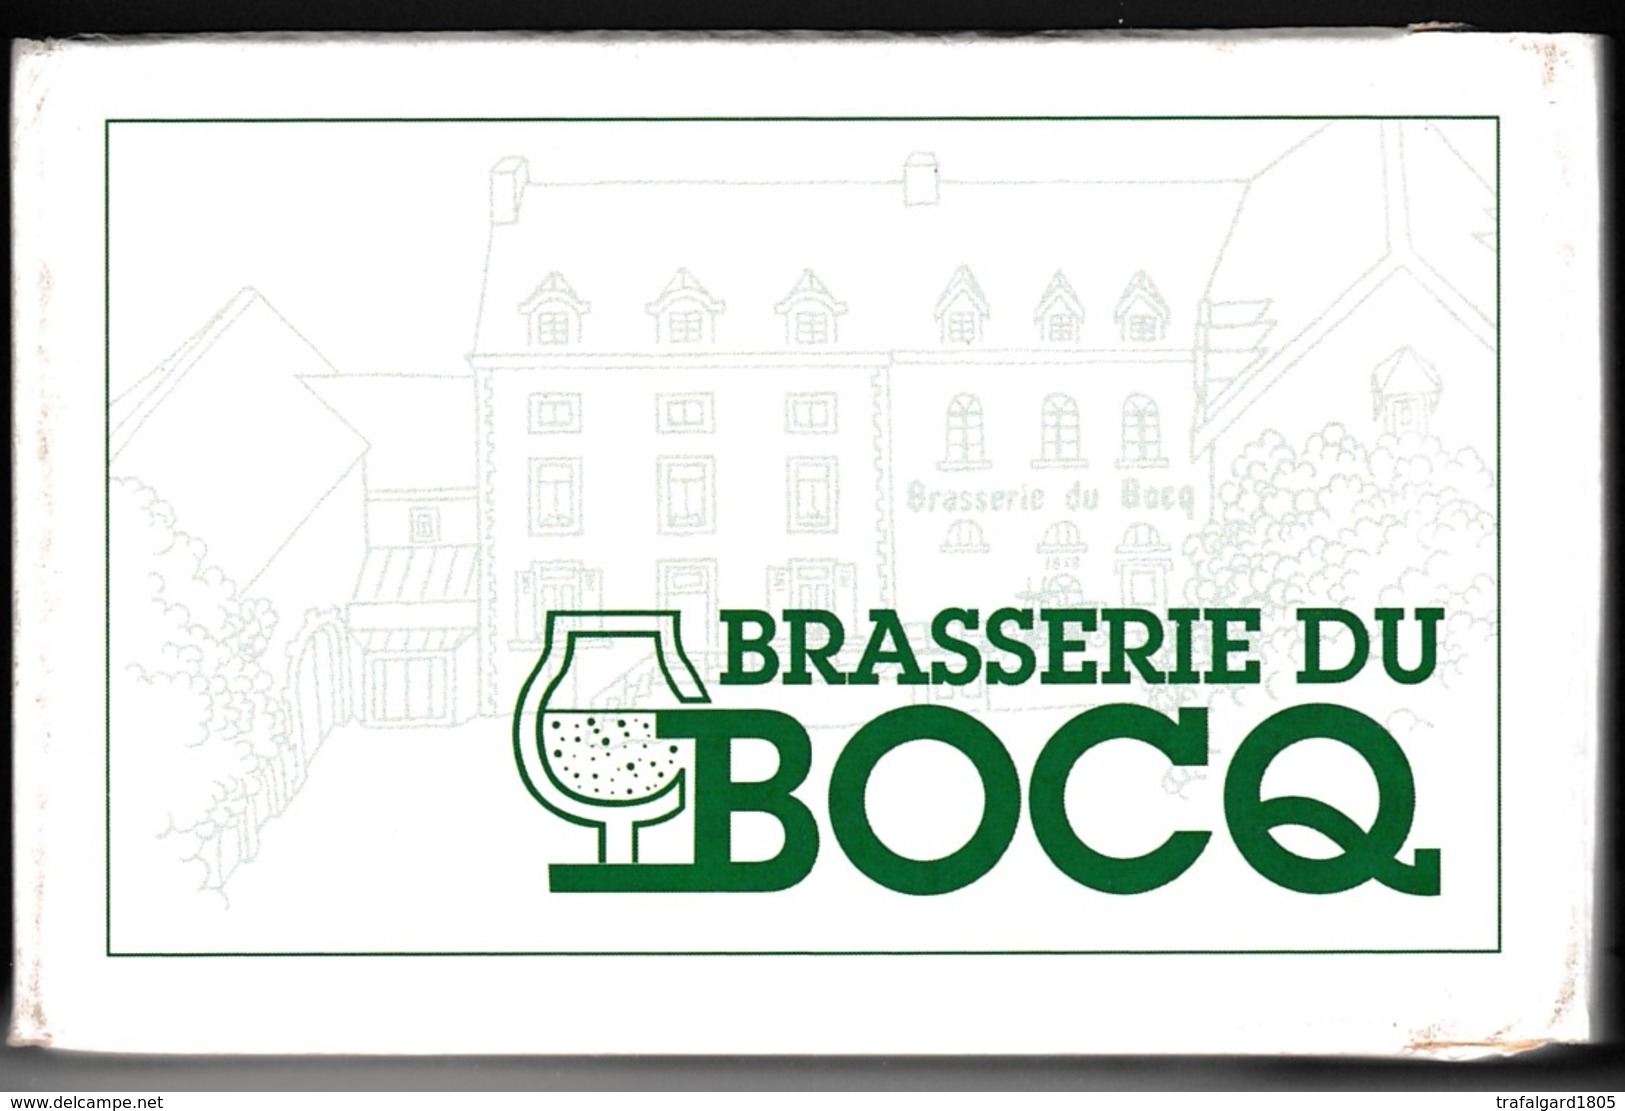 226. BRASSERIE DU BOCQ - 54 Cards